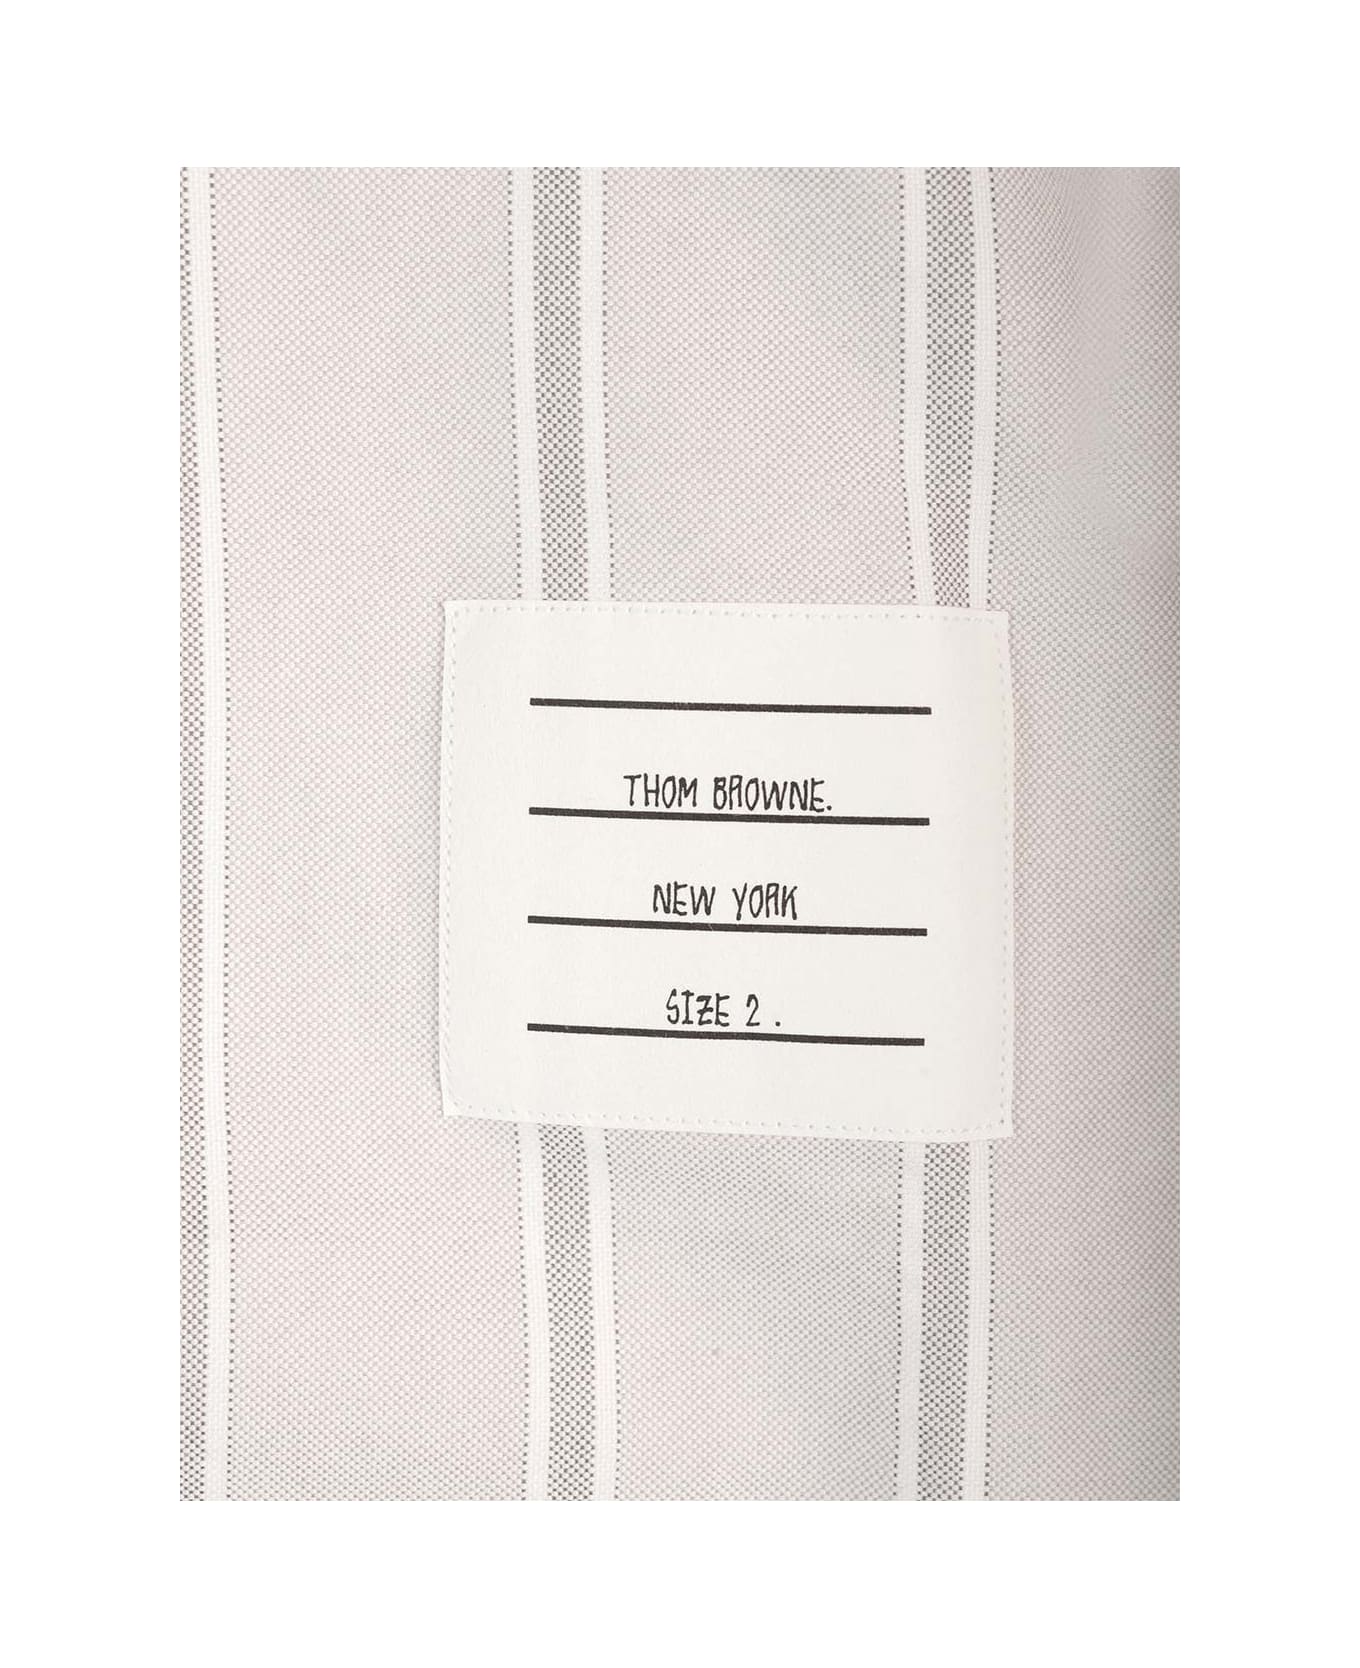 Thom Browne Oxford Striped Shirt - GREY